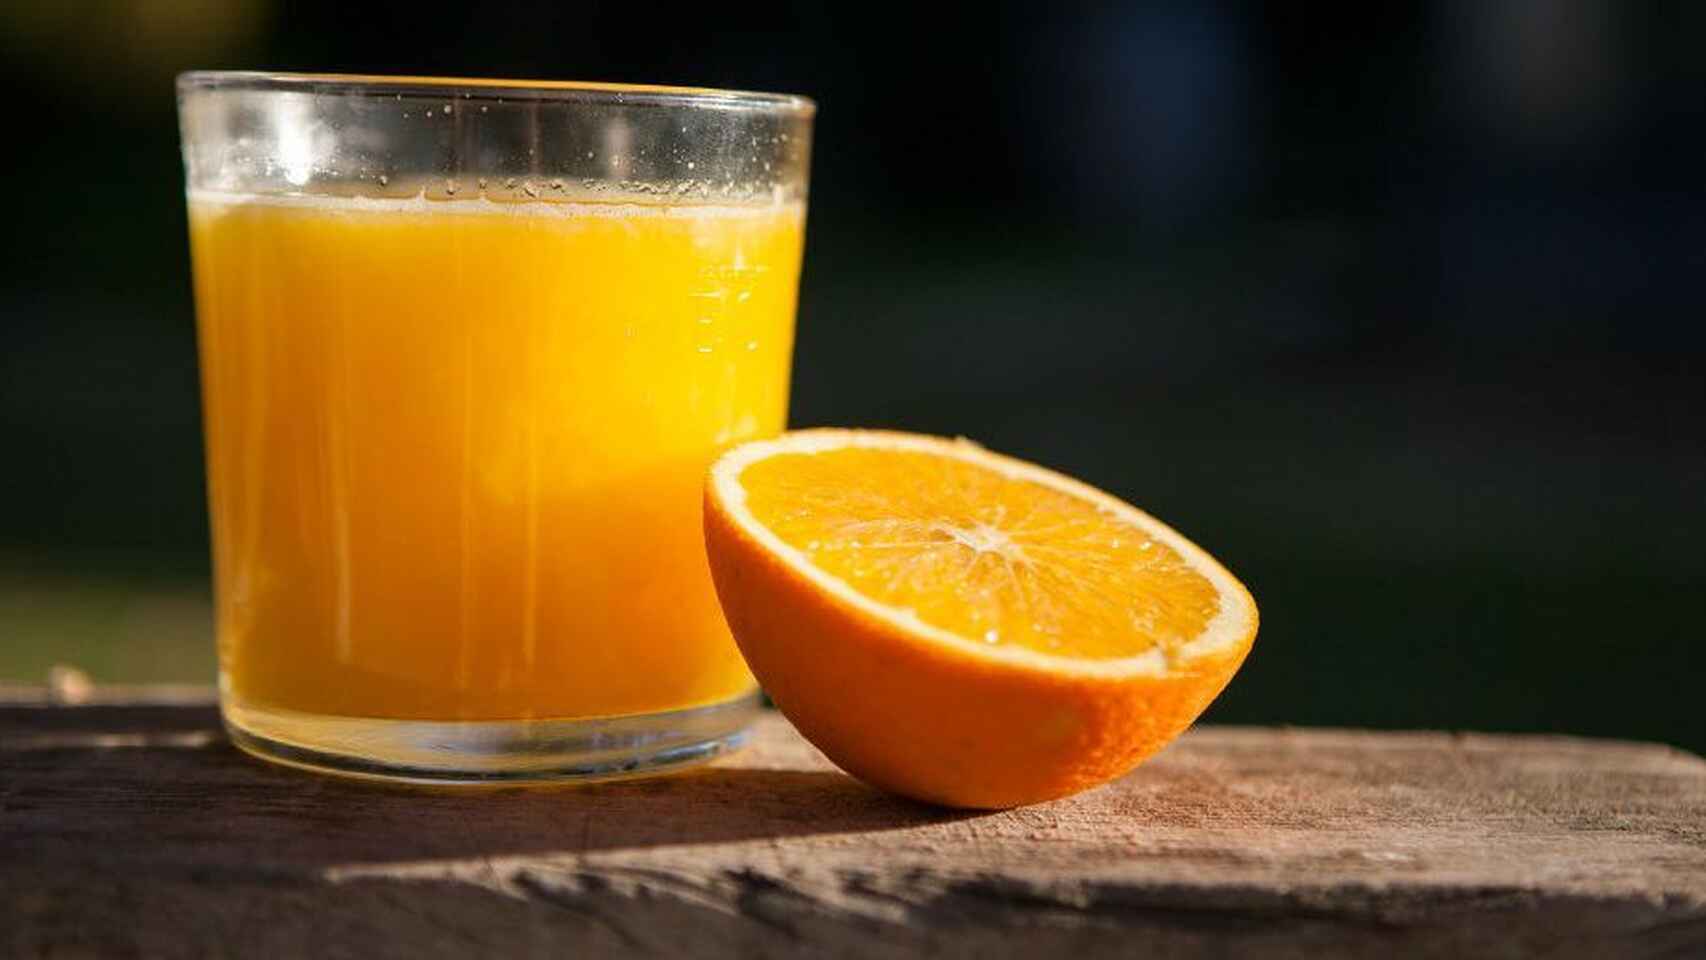 Un zumo de naranja recién exprimido.